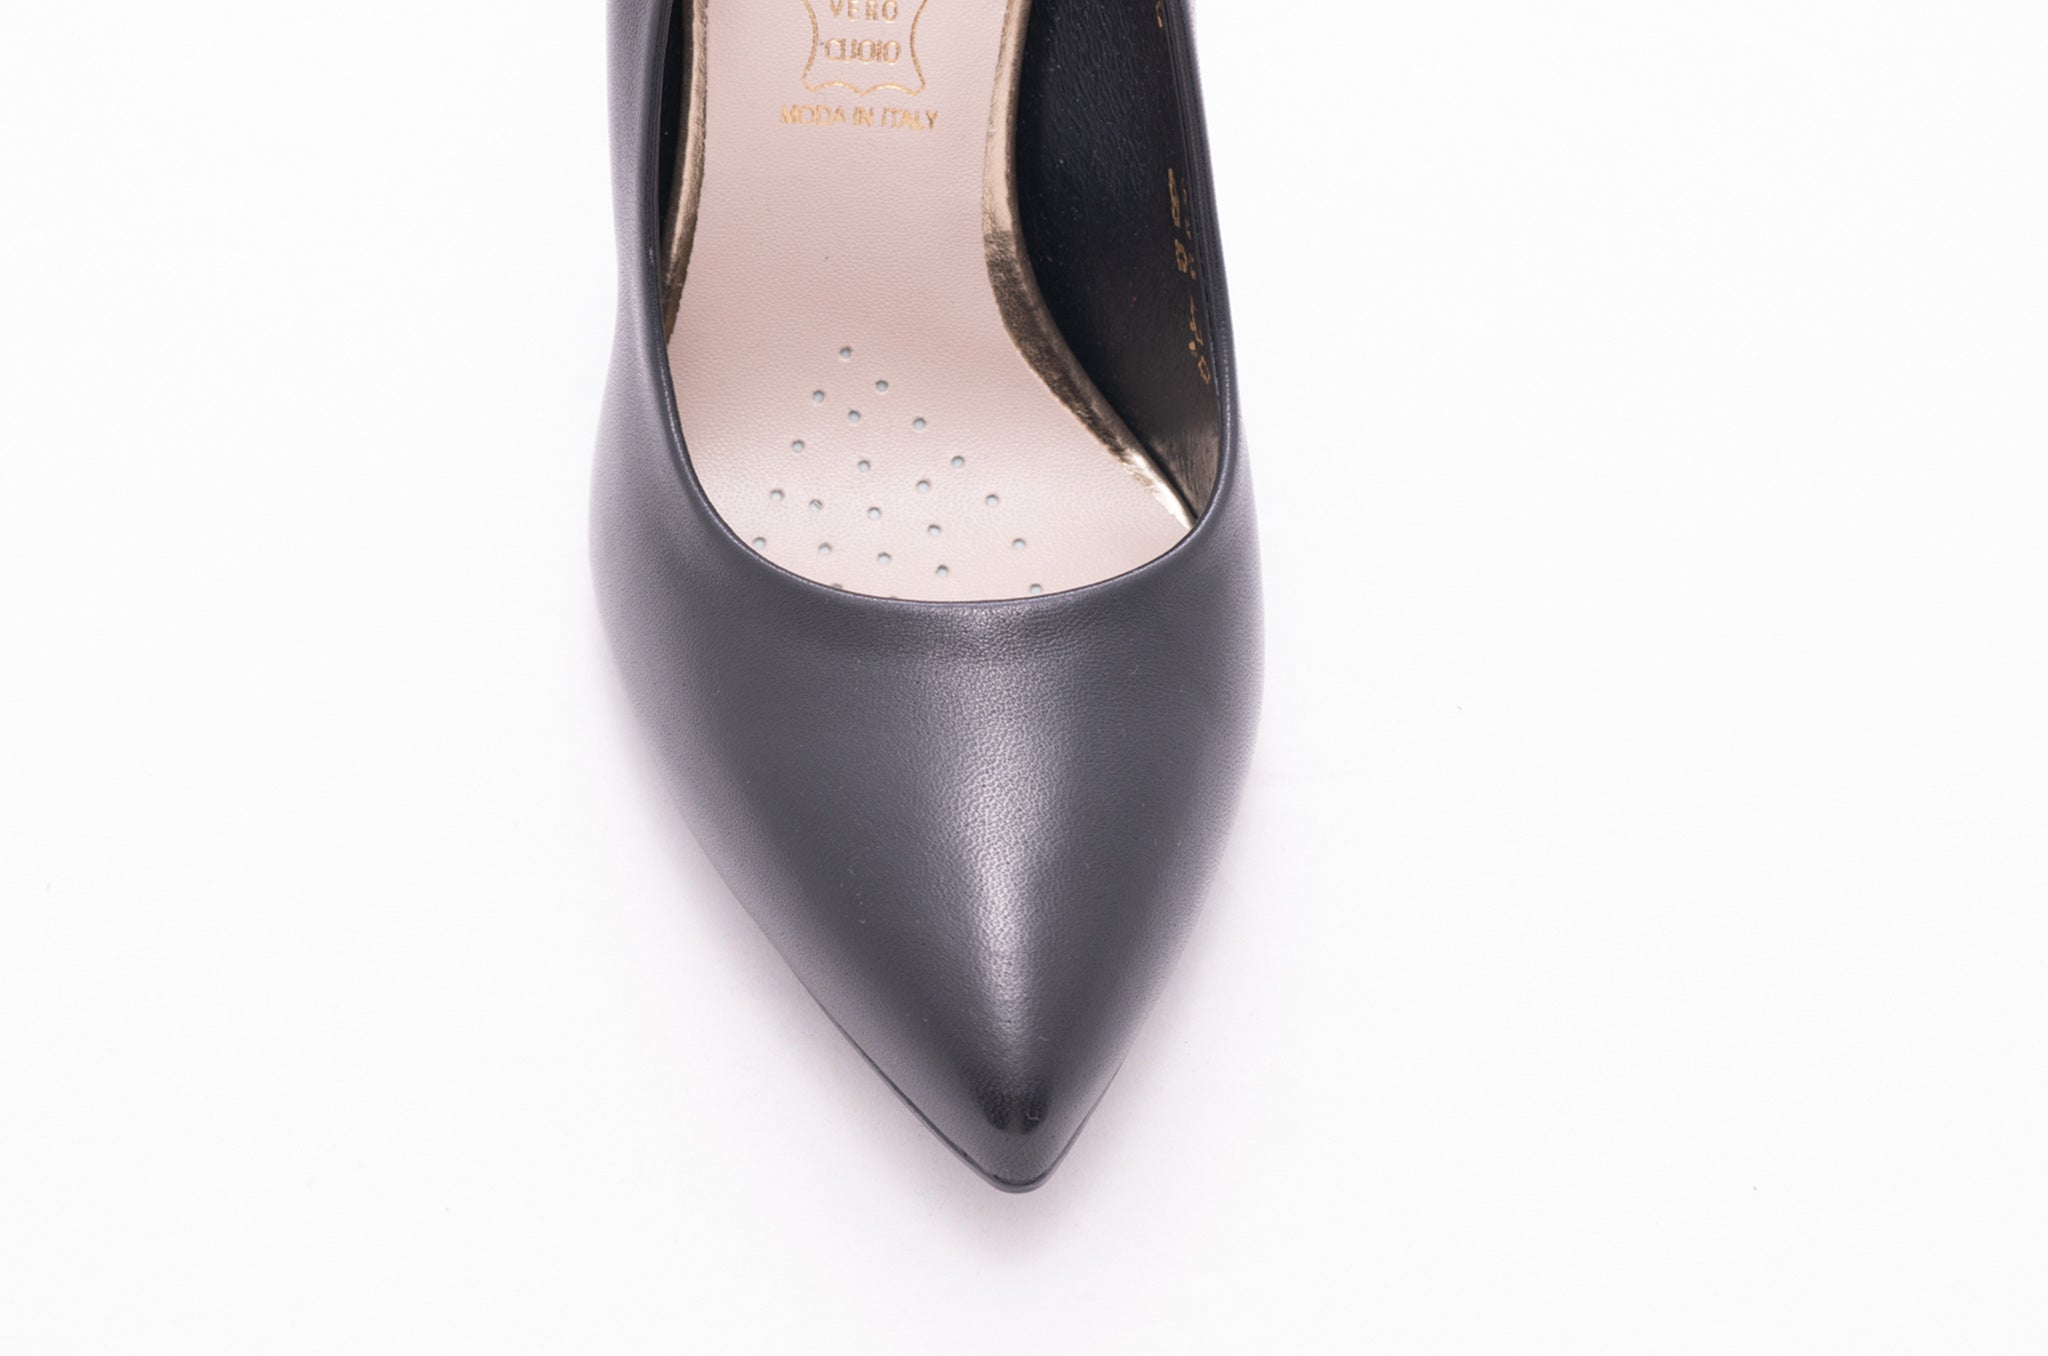 Pantofi dama eleganti piele naturala 7066 negru box